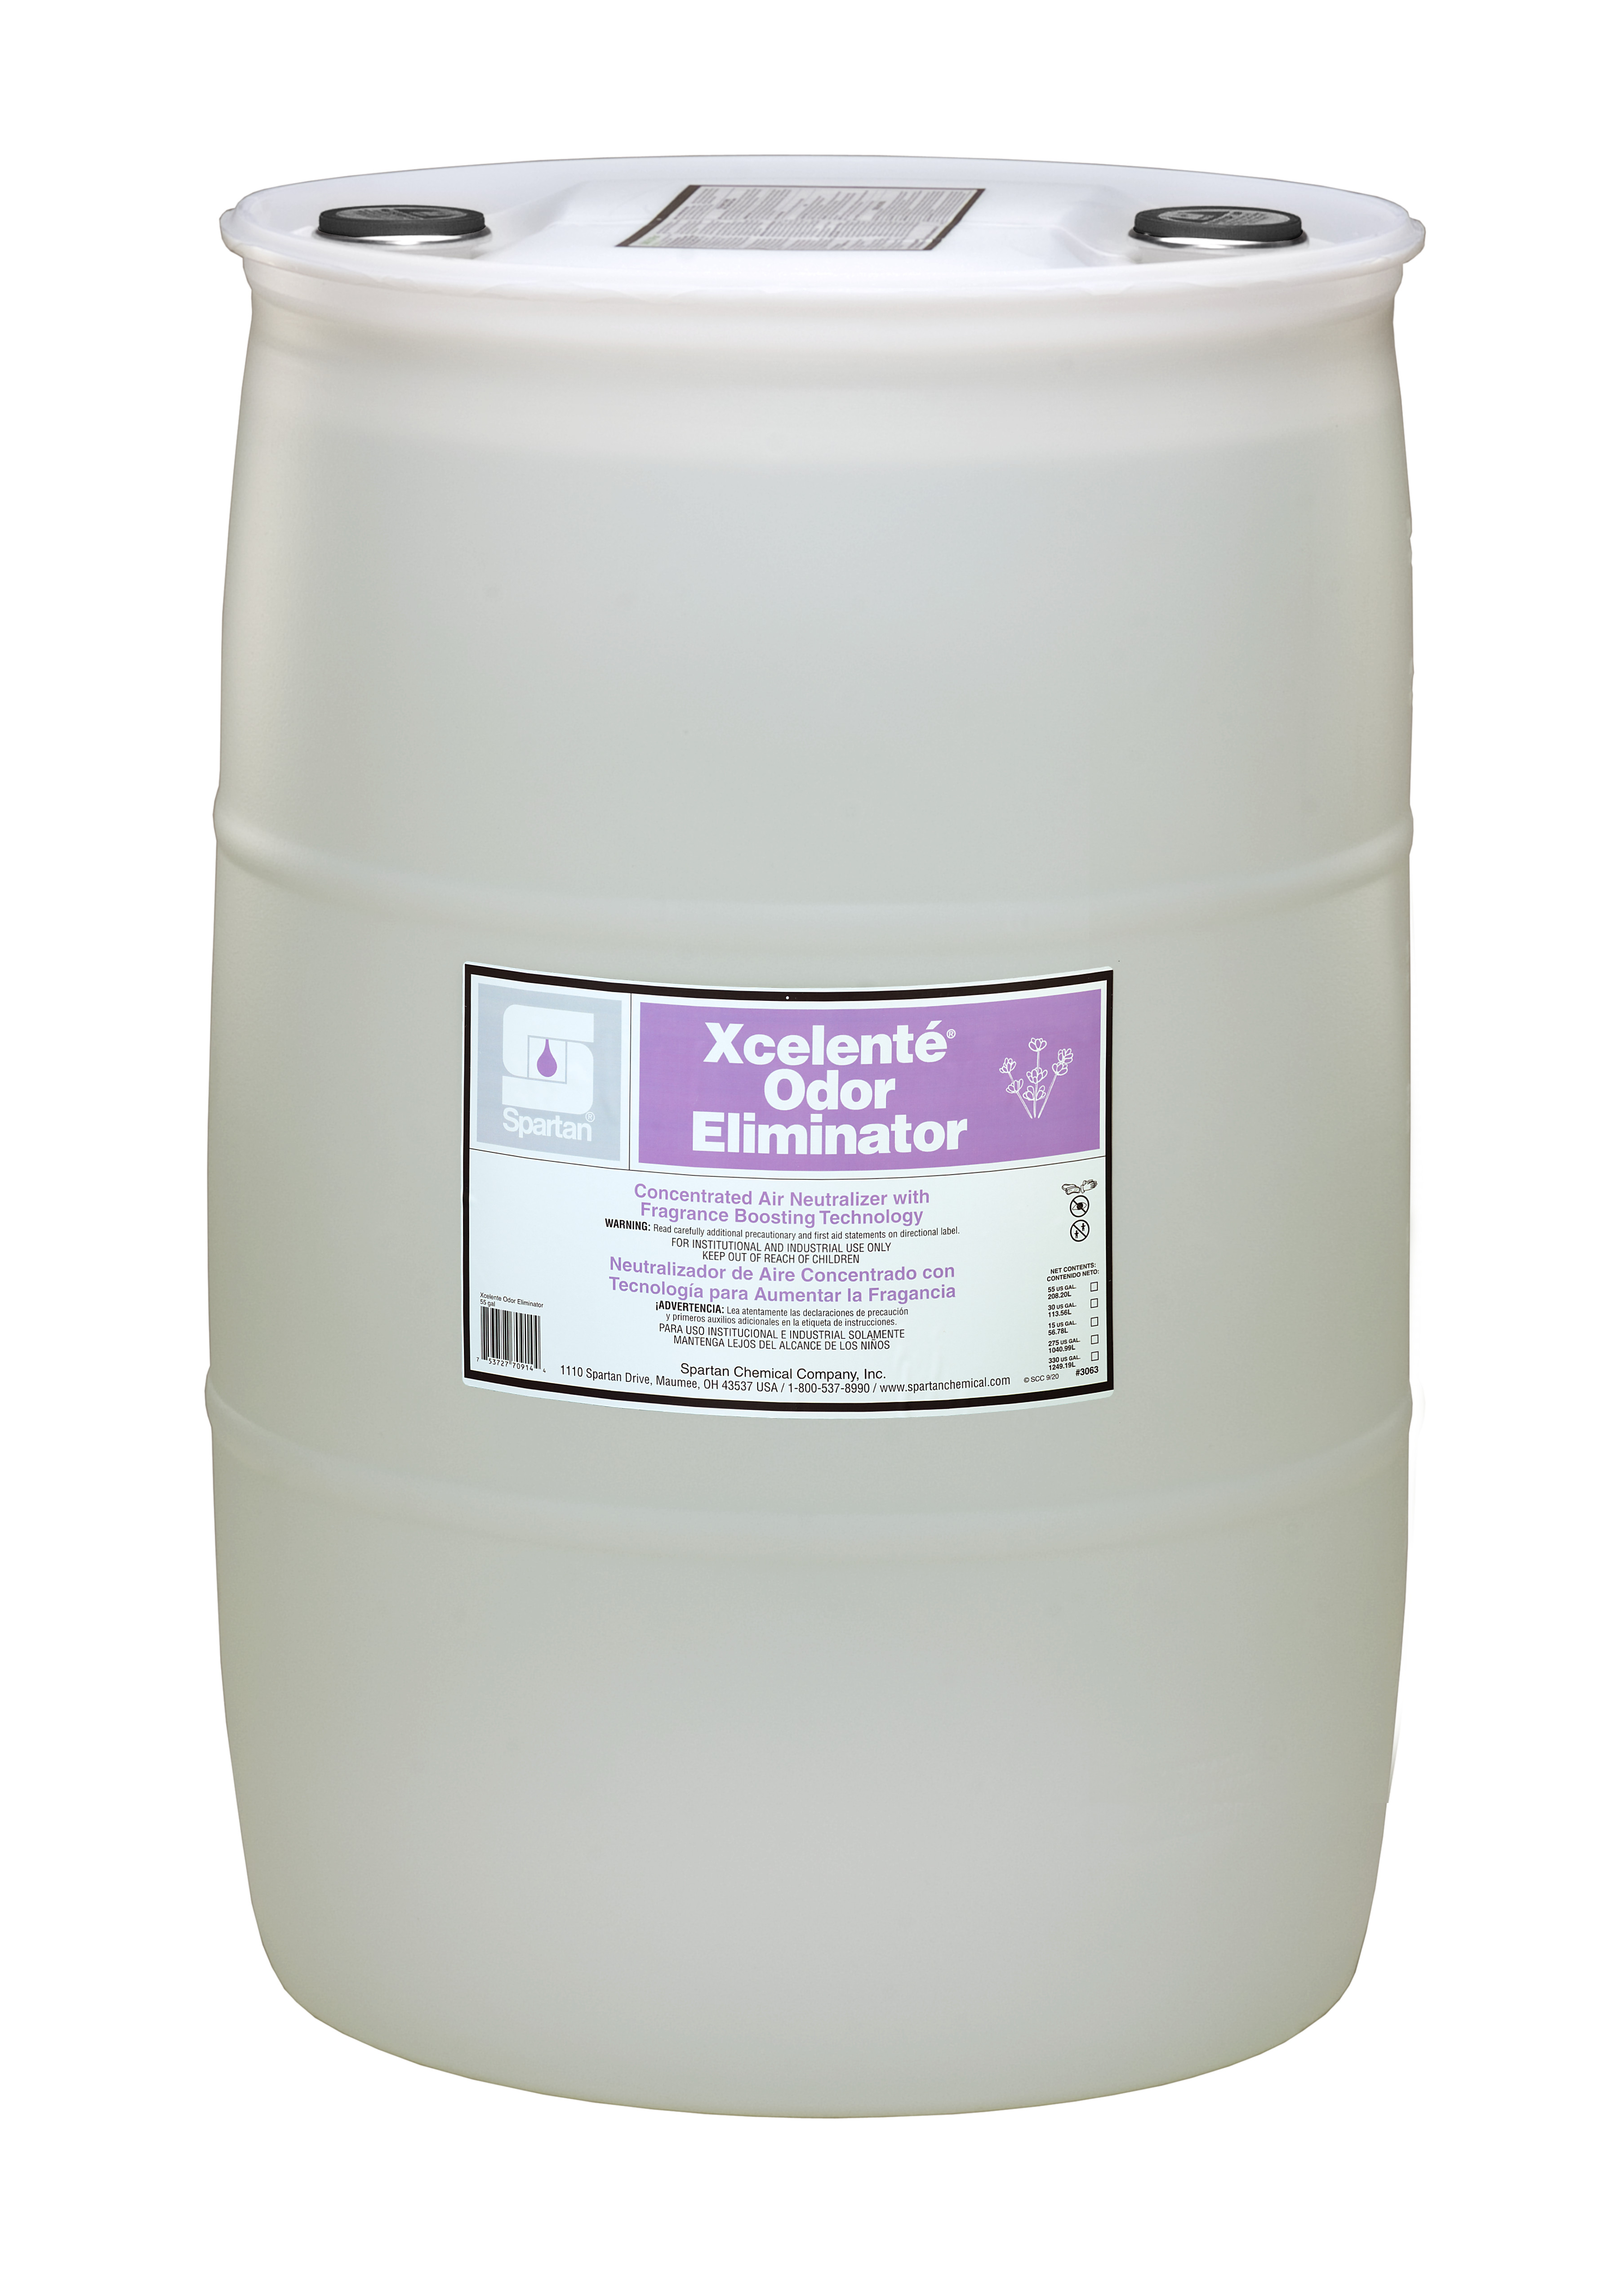 Spartan Chemical Company Xcelente Odor Eliminator, 55 gallon drum